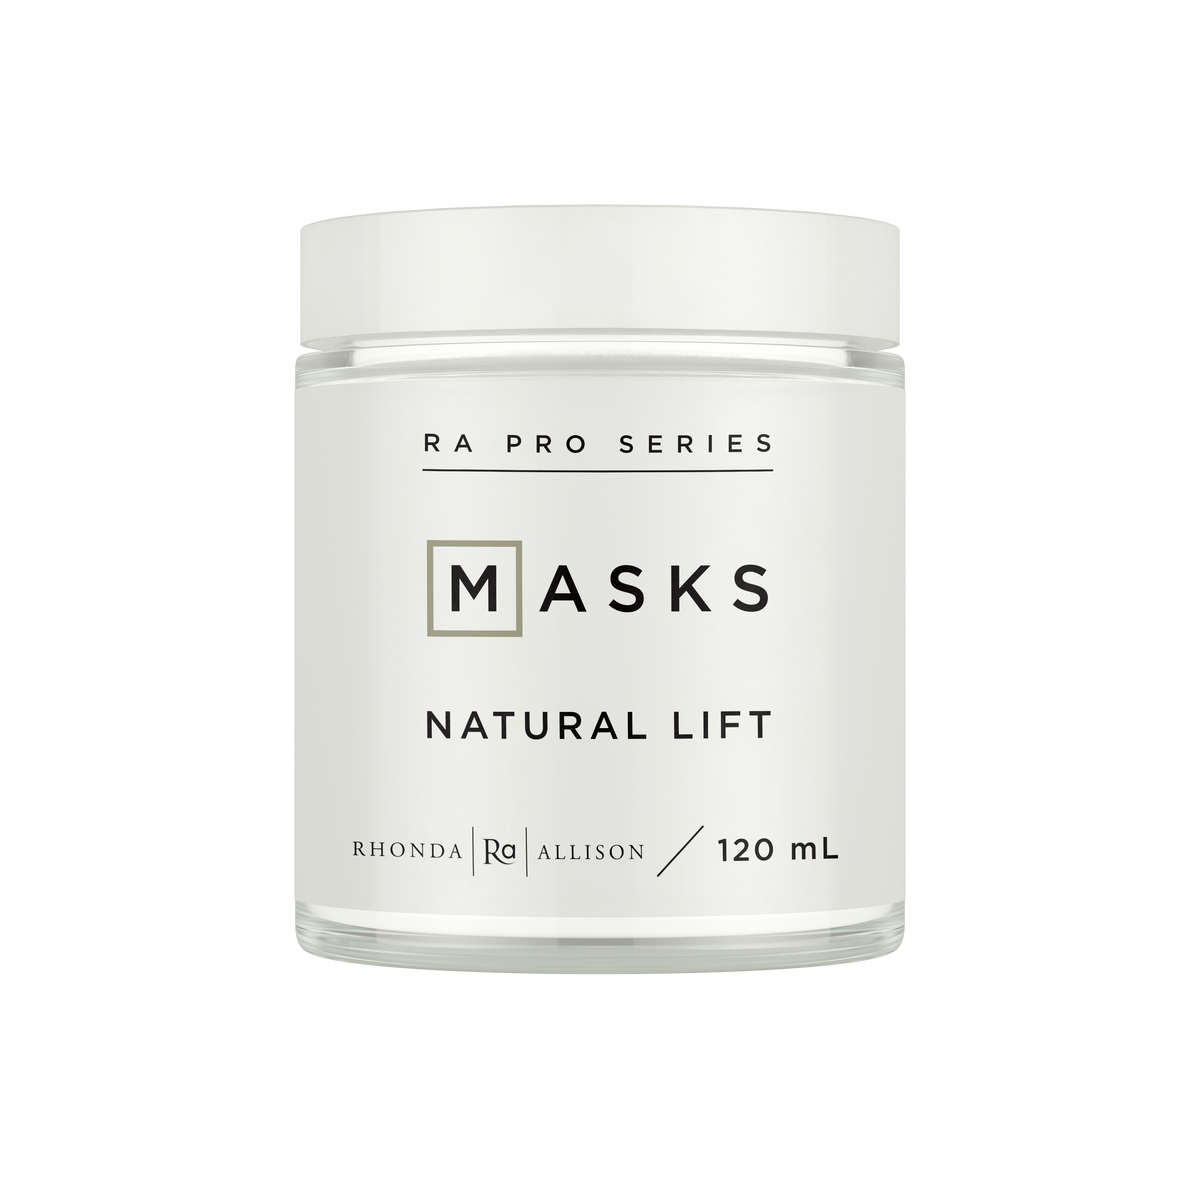 Natural Lift Masque